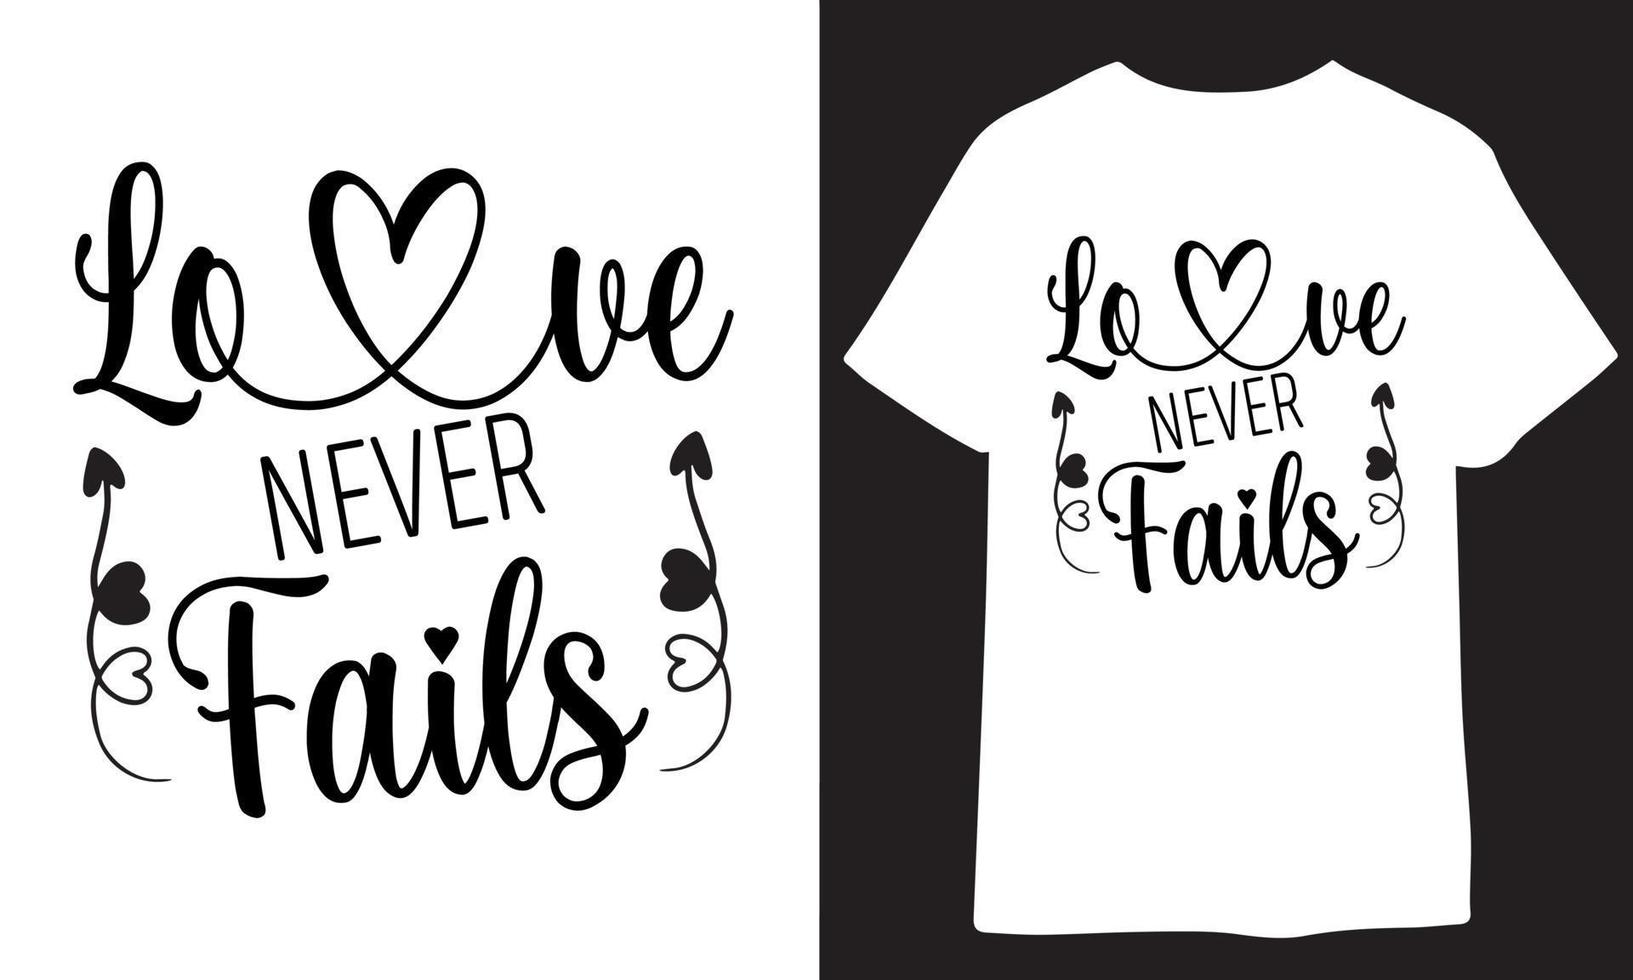 Love never fails. christian t shirt design vector